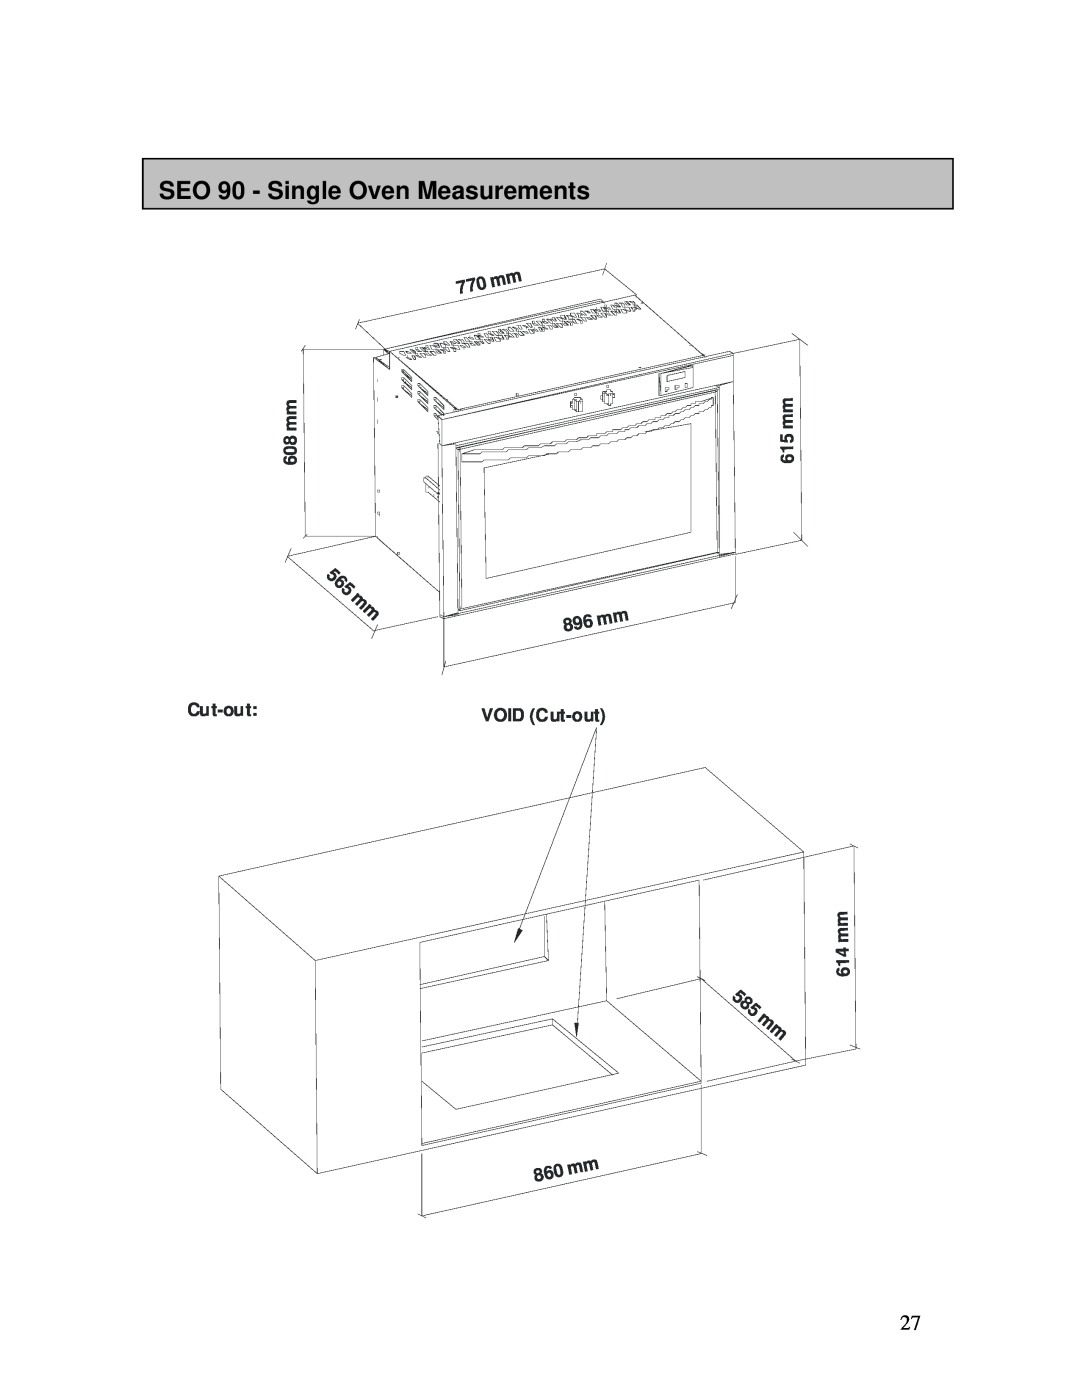 AEG B3007H-L-B user manual SEO 90 - Single Oven Measurements, 5 6 5 m m, 5 8 5 m m, 608 mm, VOID Cut-out, m m 5 1 m m 4 